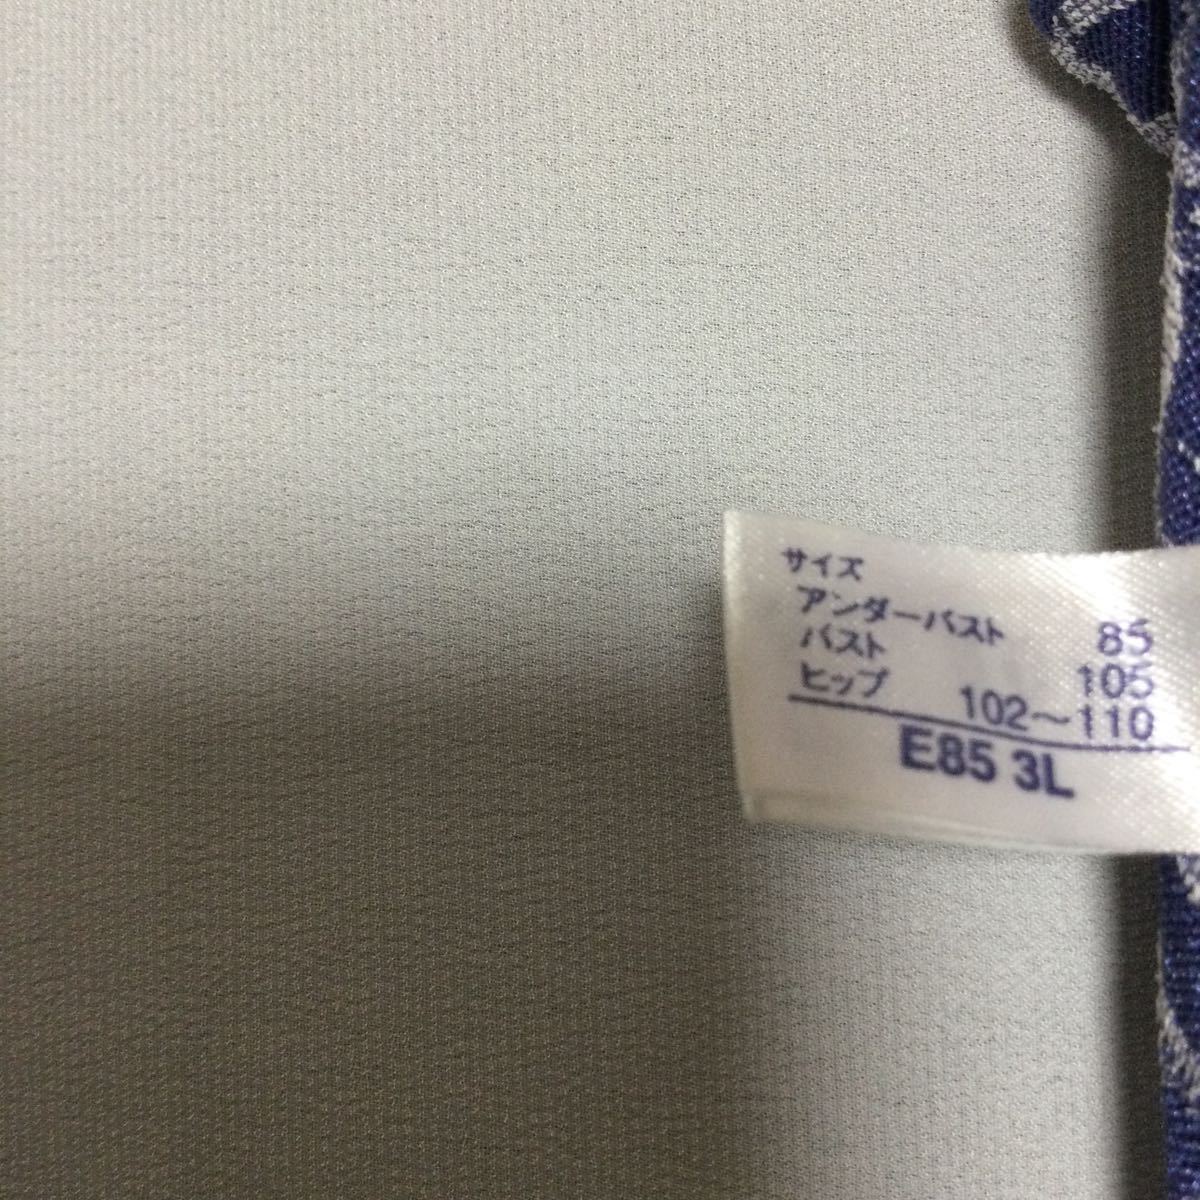  Home произведена чистка E85 3L прекрасный товар maru koMARUKO корректирующее нижнее белье корпус sheipa- Sakura she-pa- бесплатная доставка большой размер 